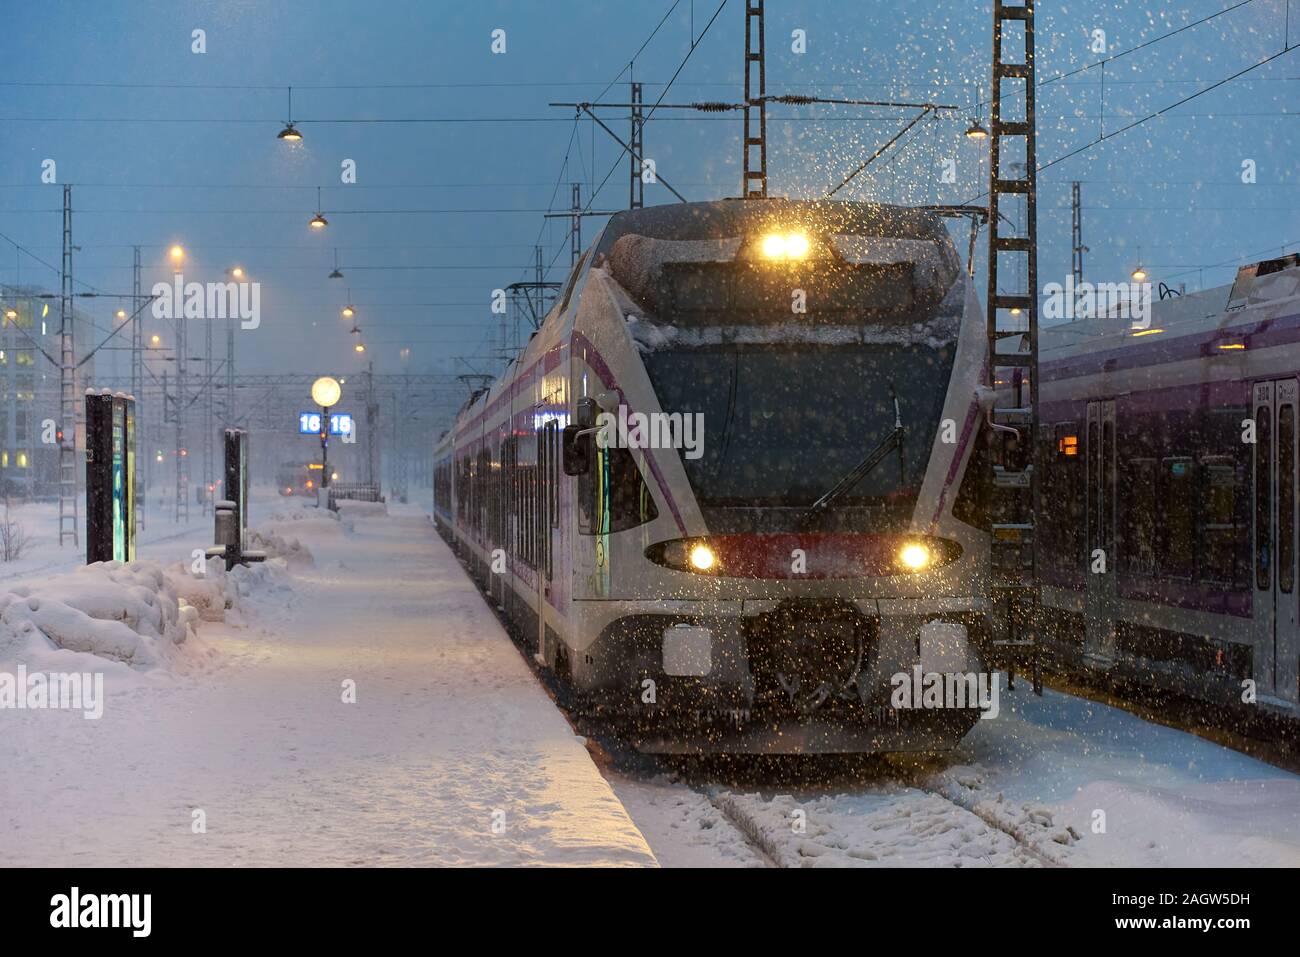 Helsinki, Finnland - Februar 6, 2019: Lokale pendlerzug am Helsinki Hauptbahnhof in schweren Schneesturm Ankunft kurz vor der Morgendämmerung in d Stockfoto